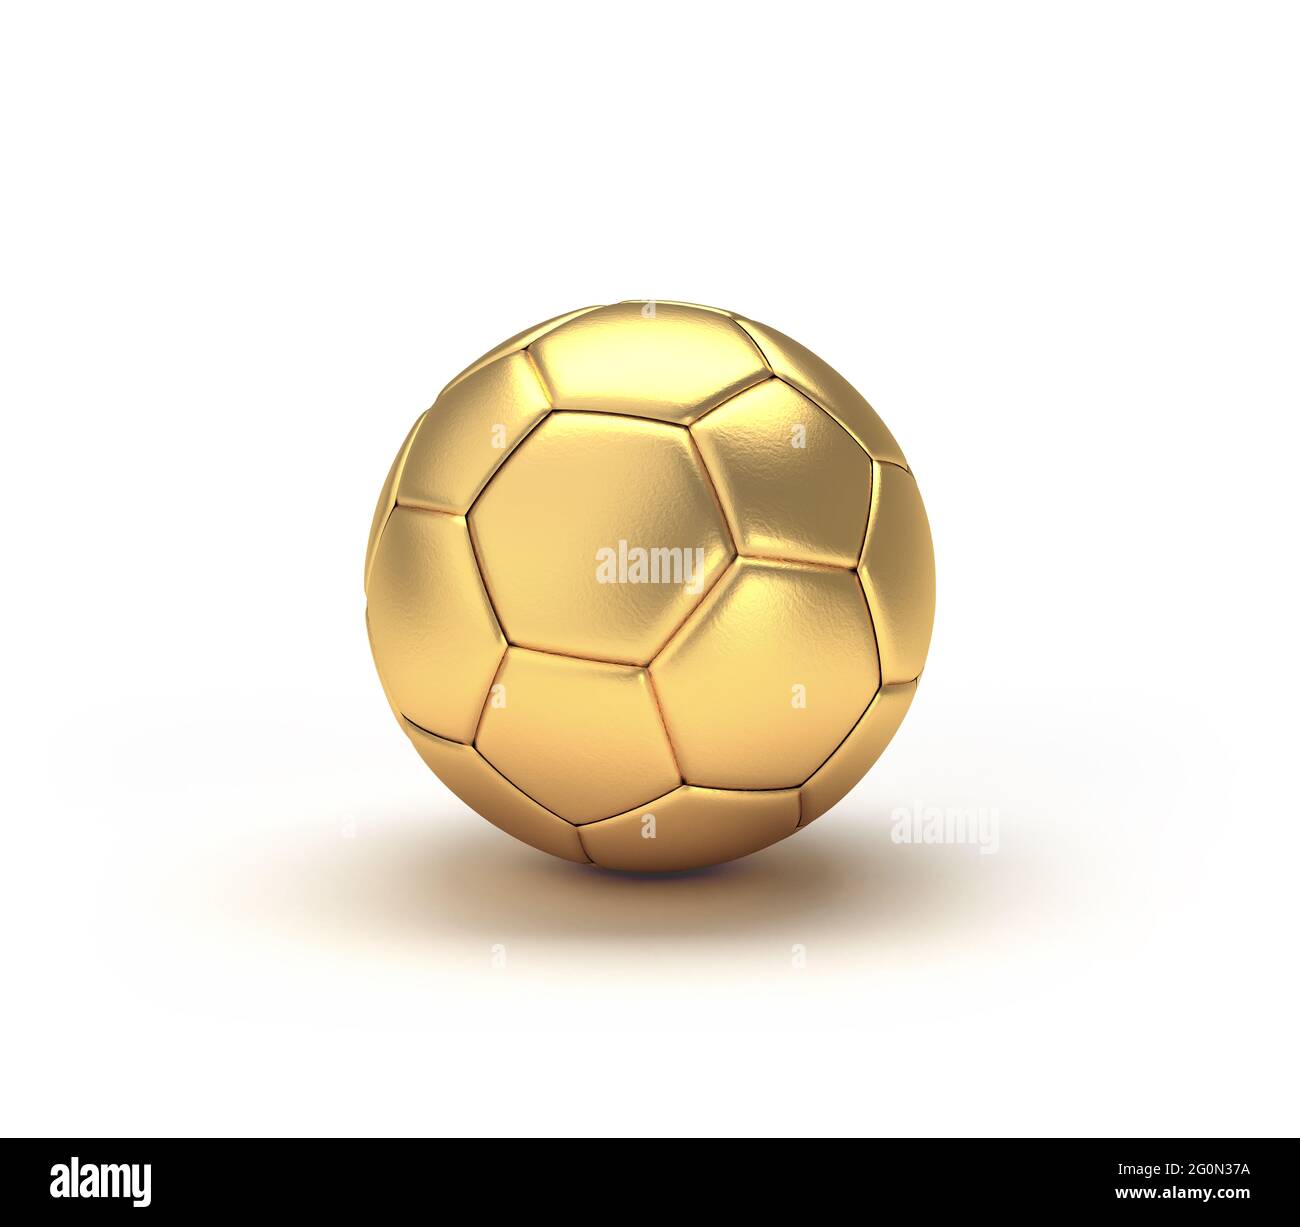 Pelota de fútbol de oro aislada sobre fondo blanco. Ilustración 3D. Foto de stock